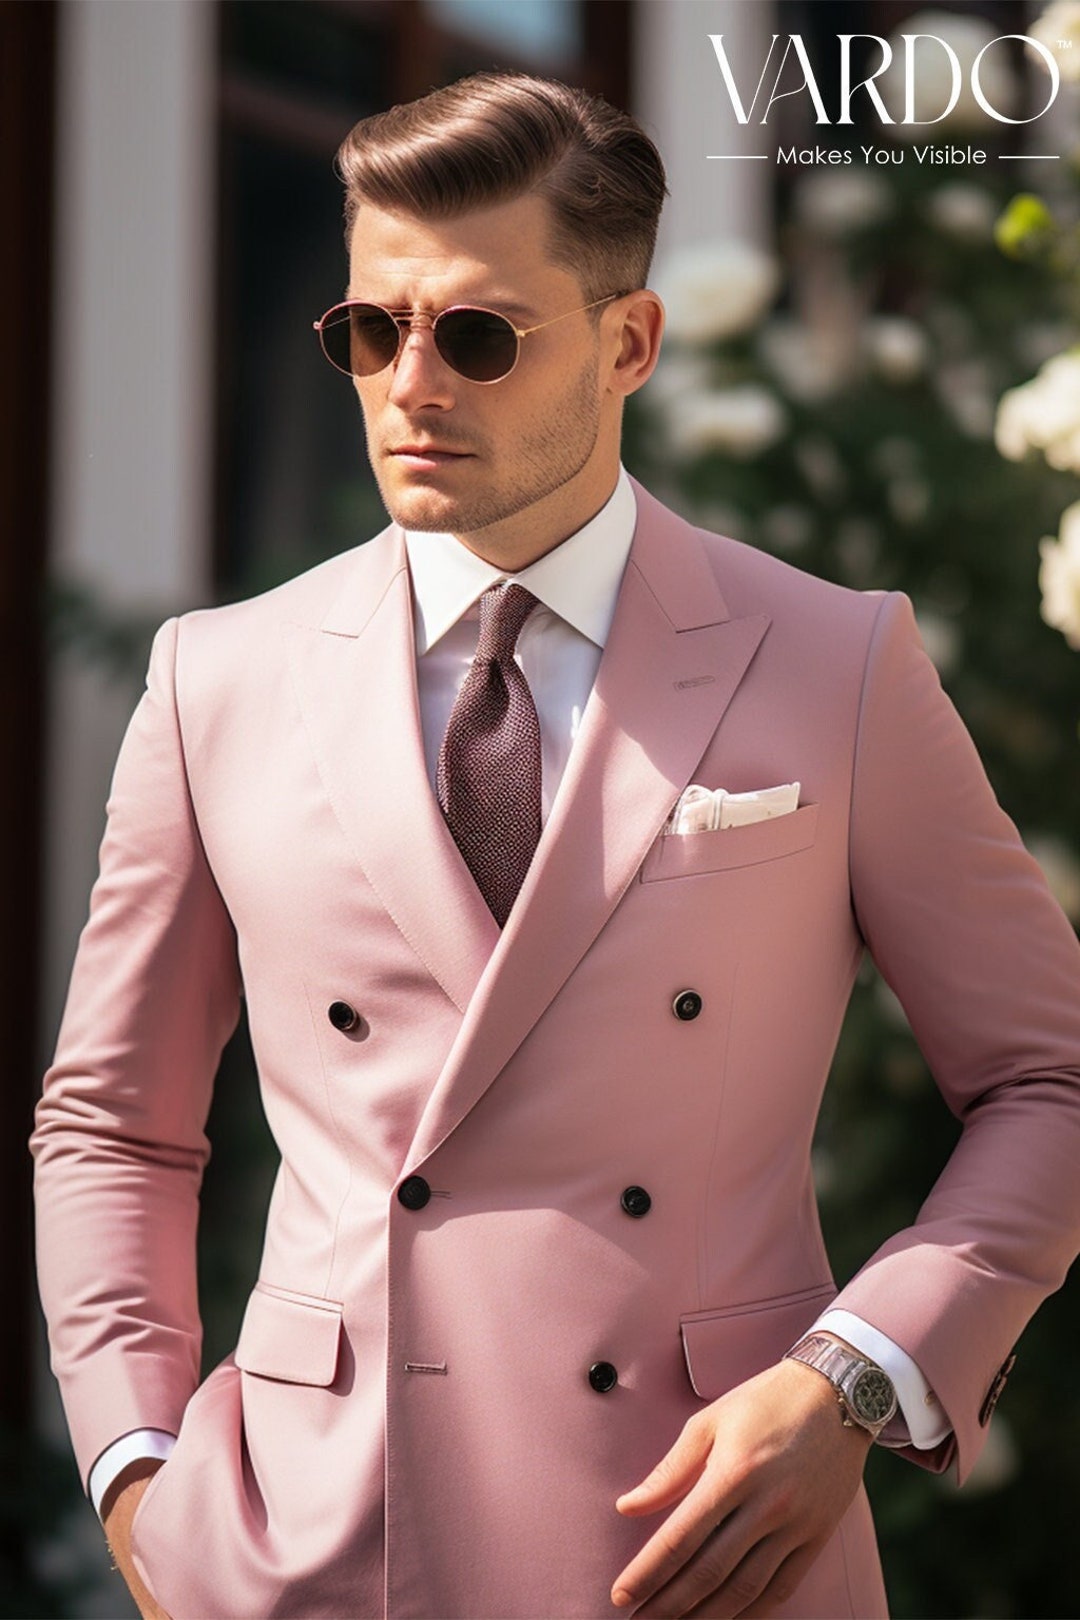 Dusty Rose Double Breasted Suit for Men Premium Men's Wedding Suit ...